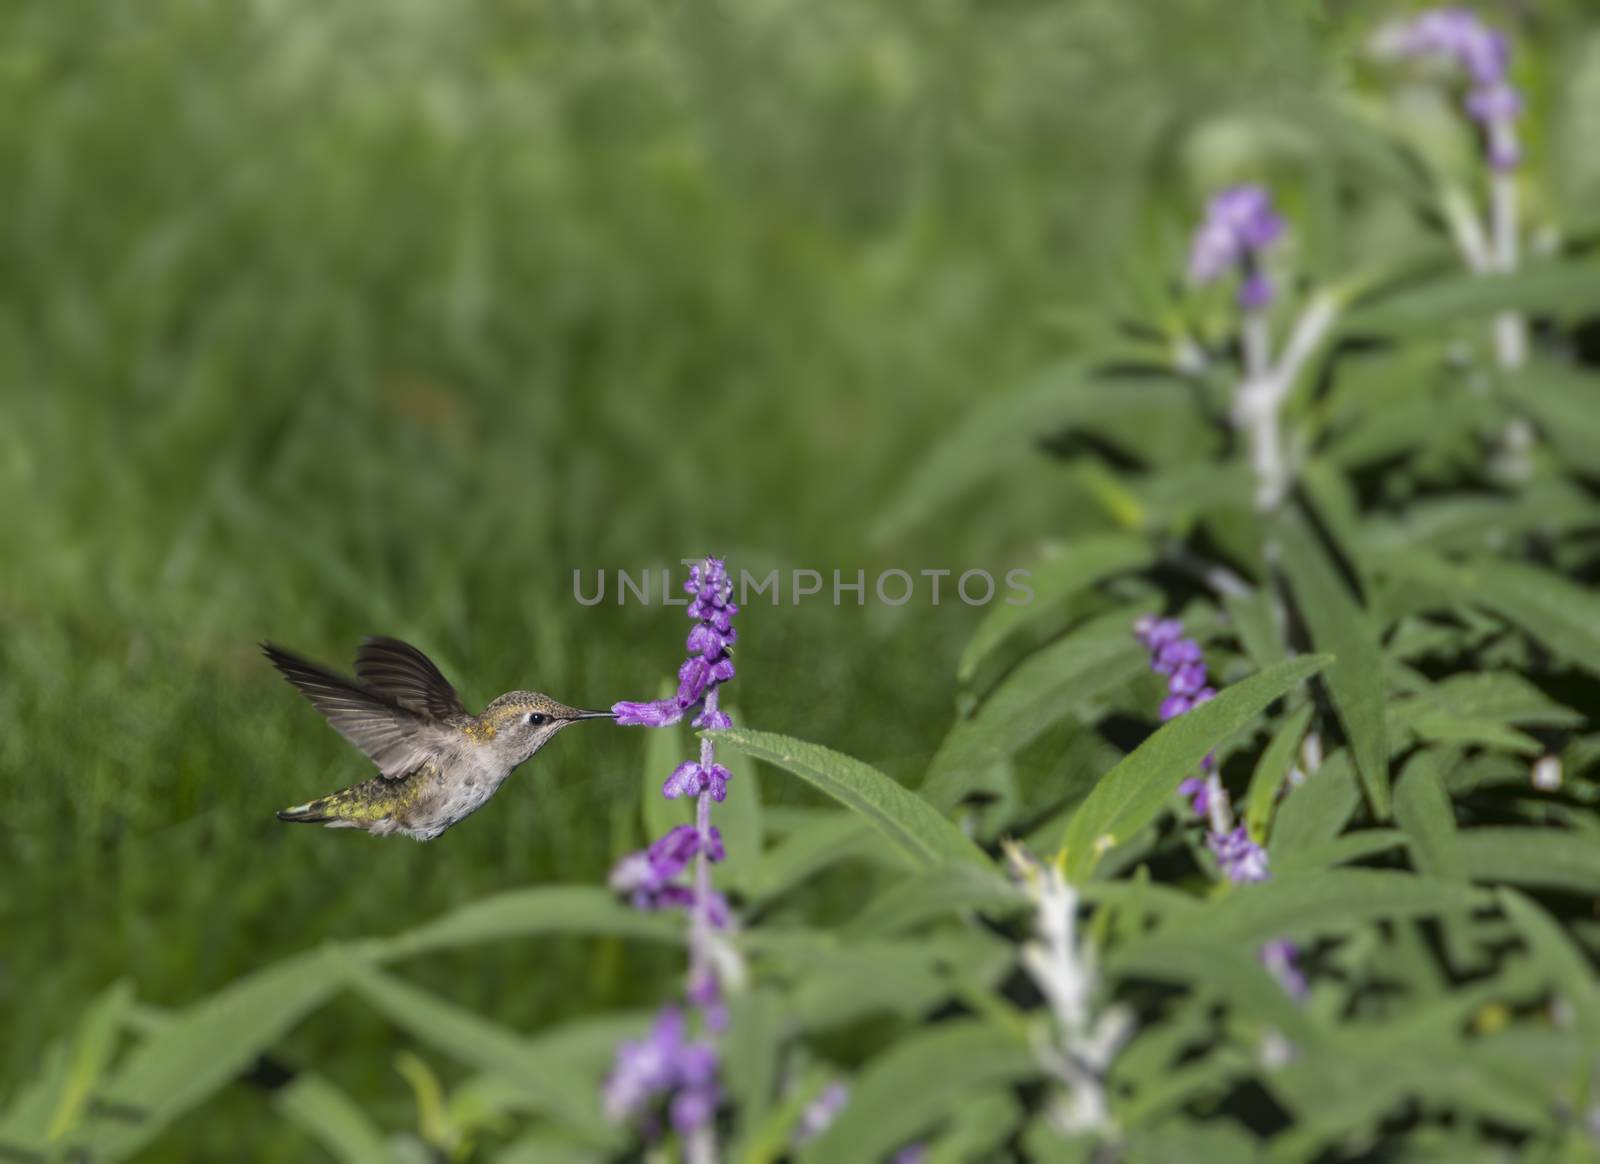 Female Black-chinned Hummingbird, Archilochus alexandri, drinking nectar from a flower.